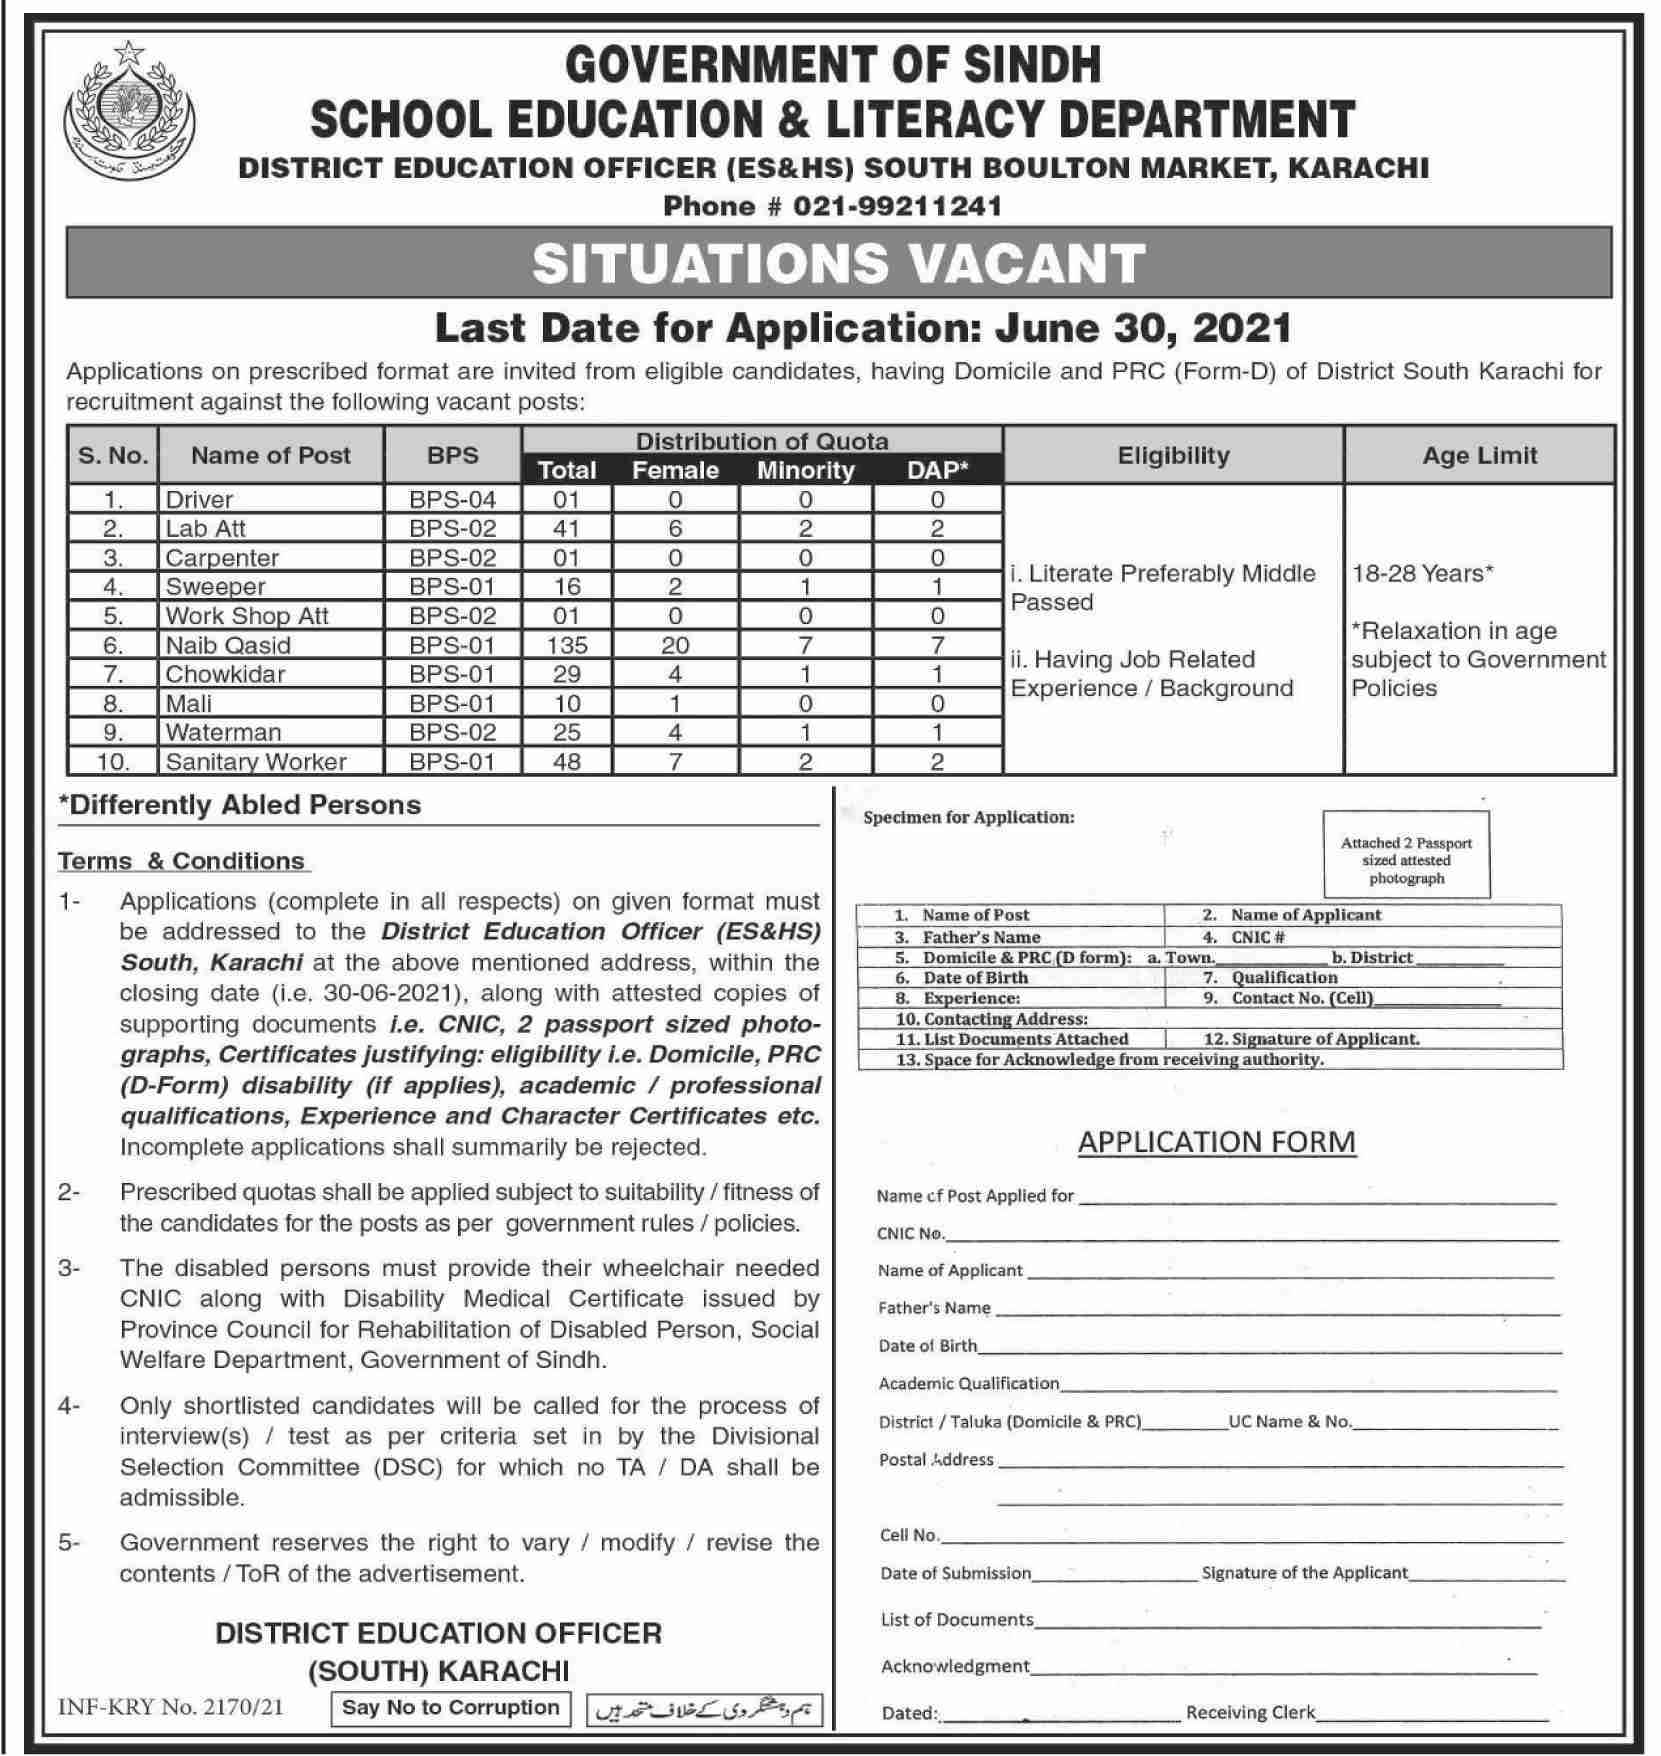 School Education & Literacy Department South Boultan Market Karachi Jobs 2021